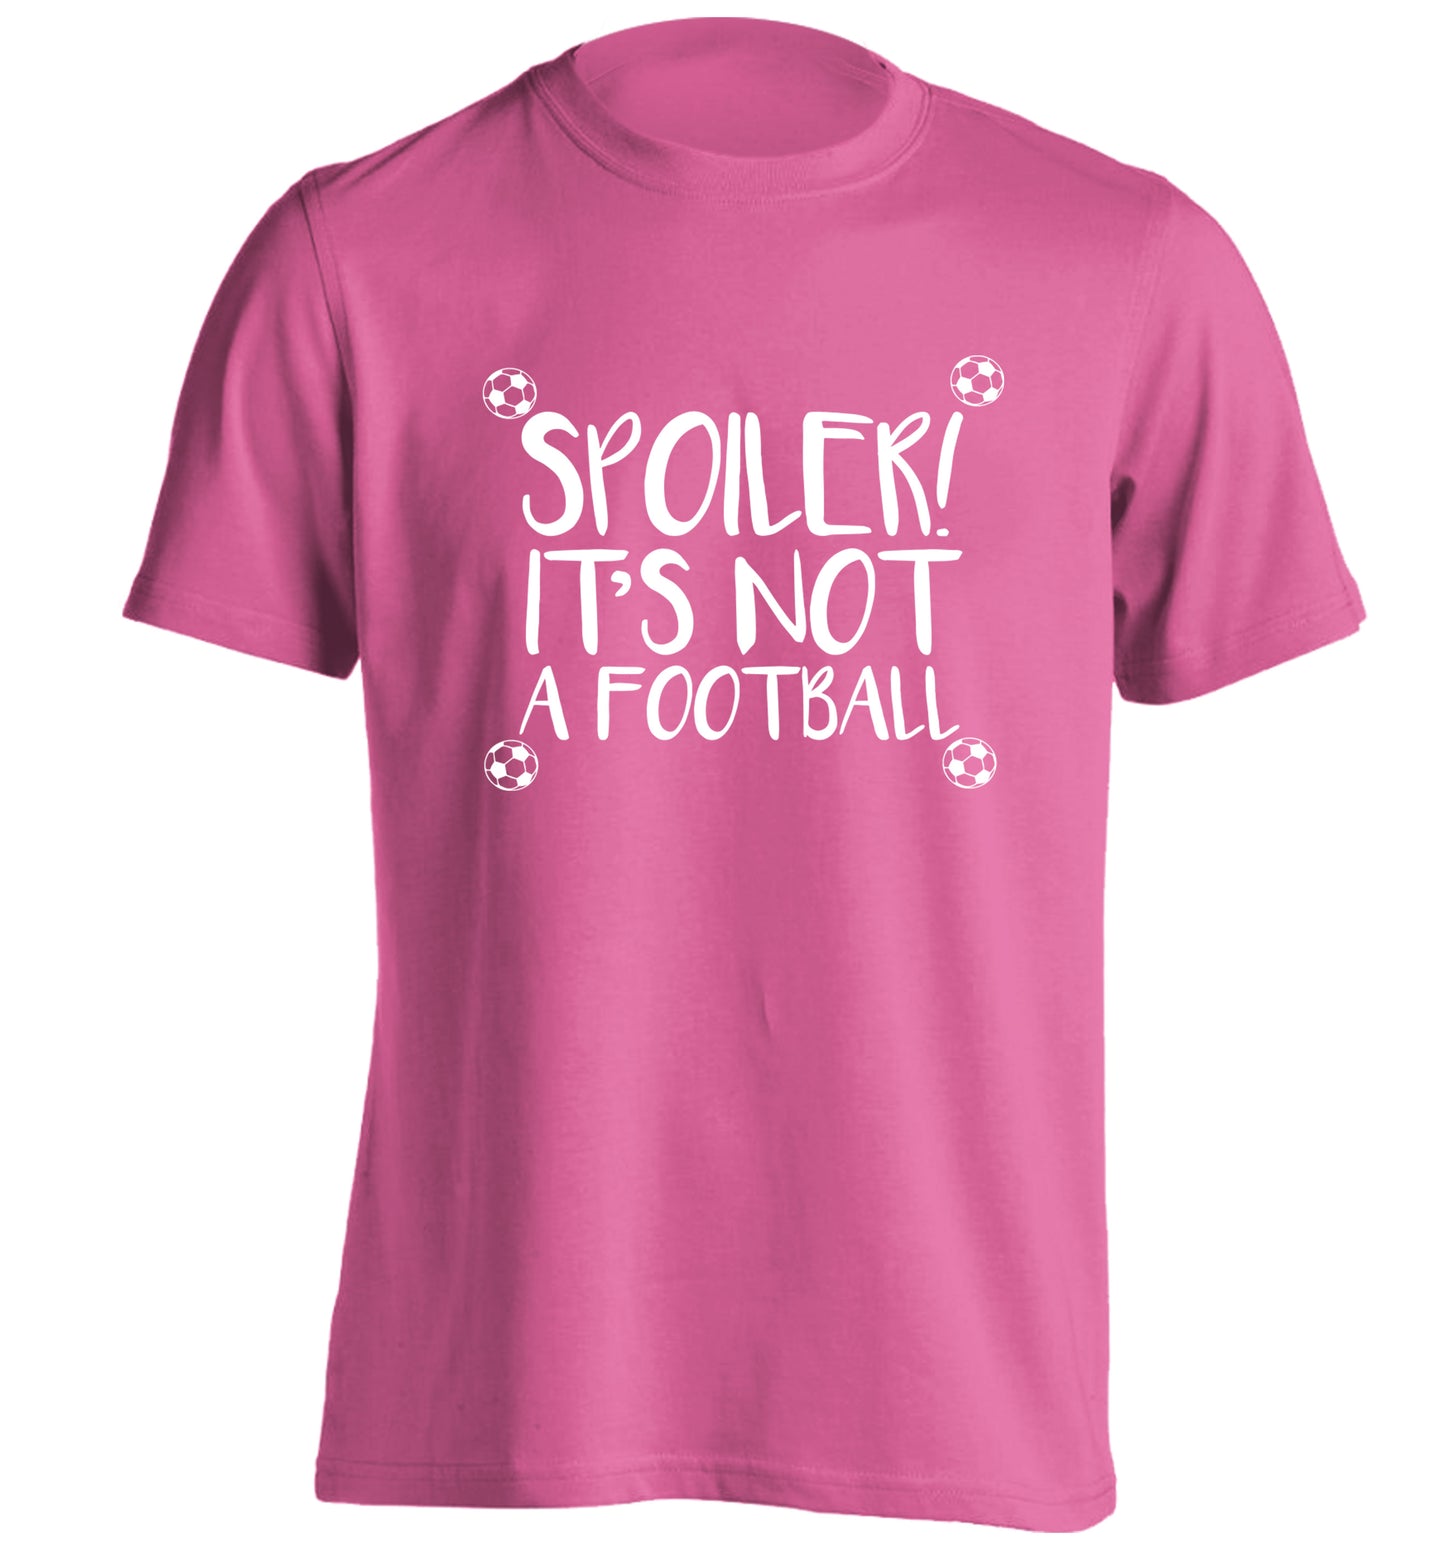 Spoiler it's not a football adults unisex pink Tshirt 2XL